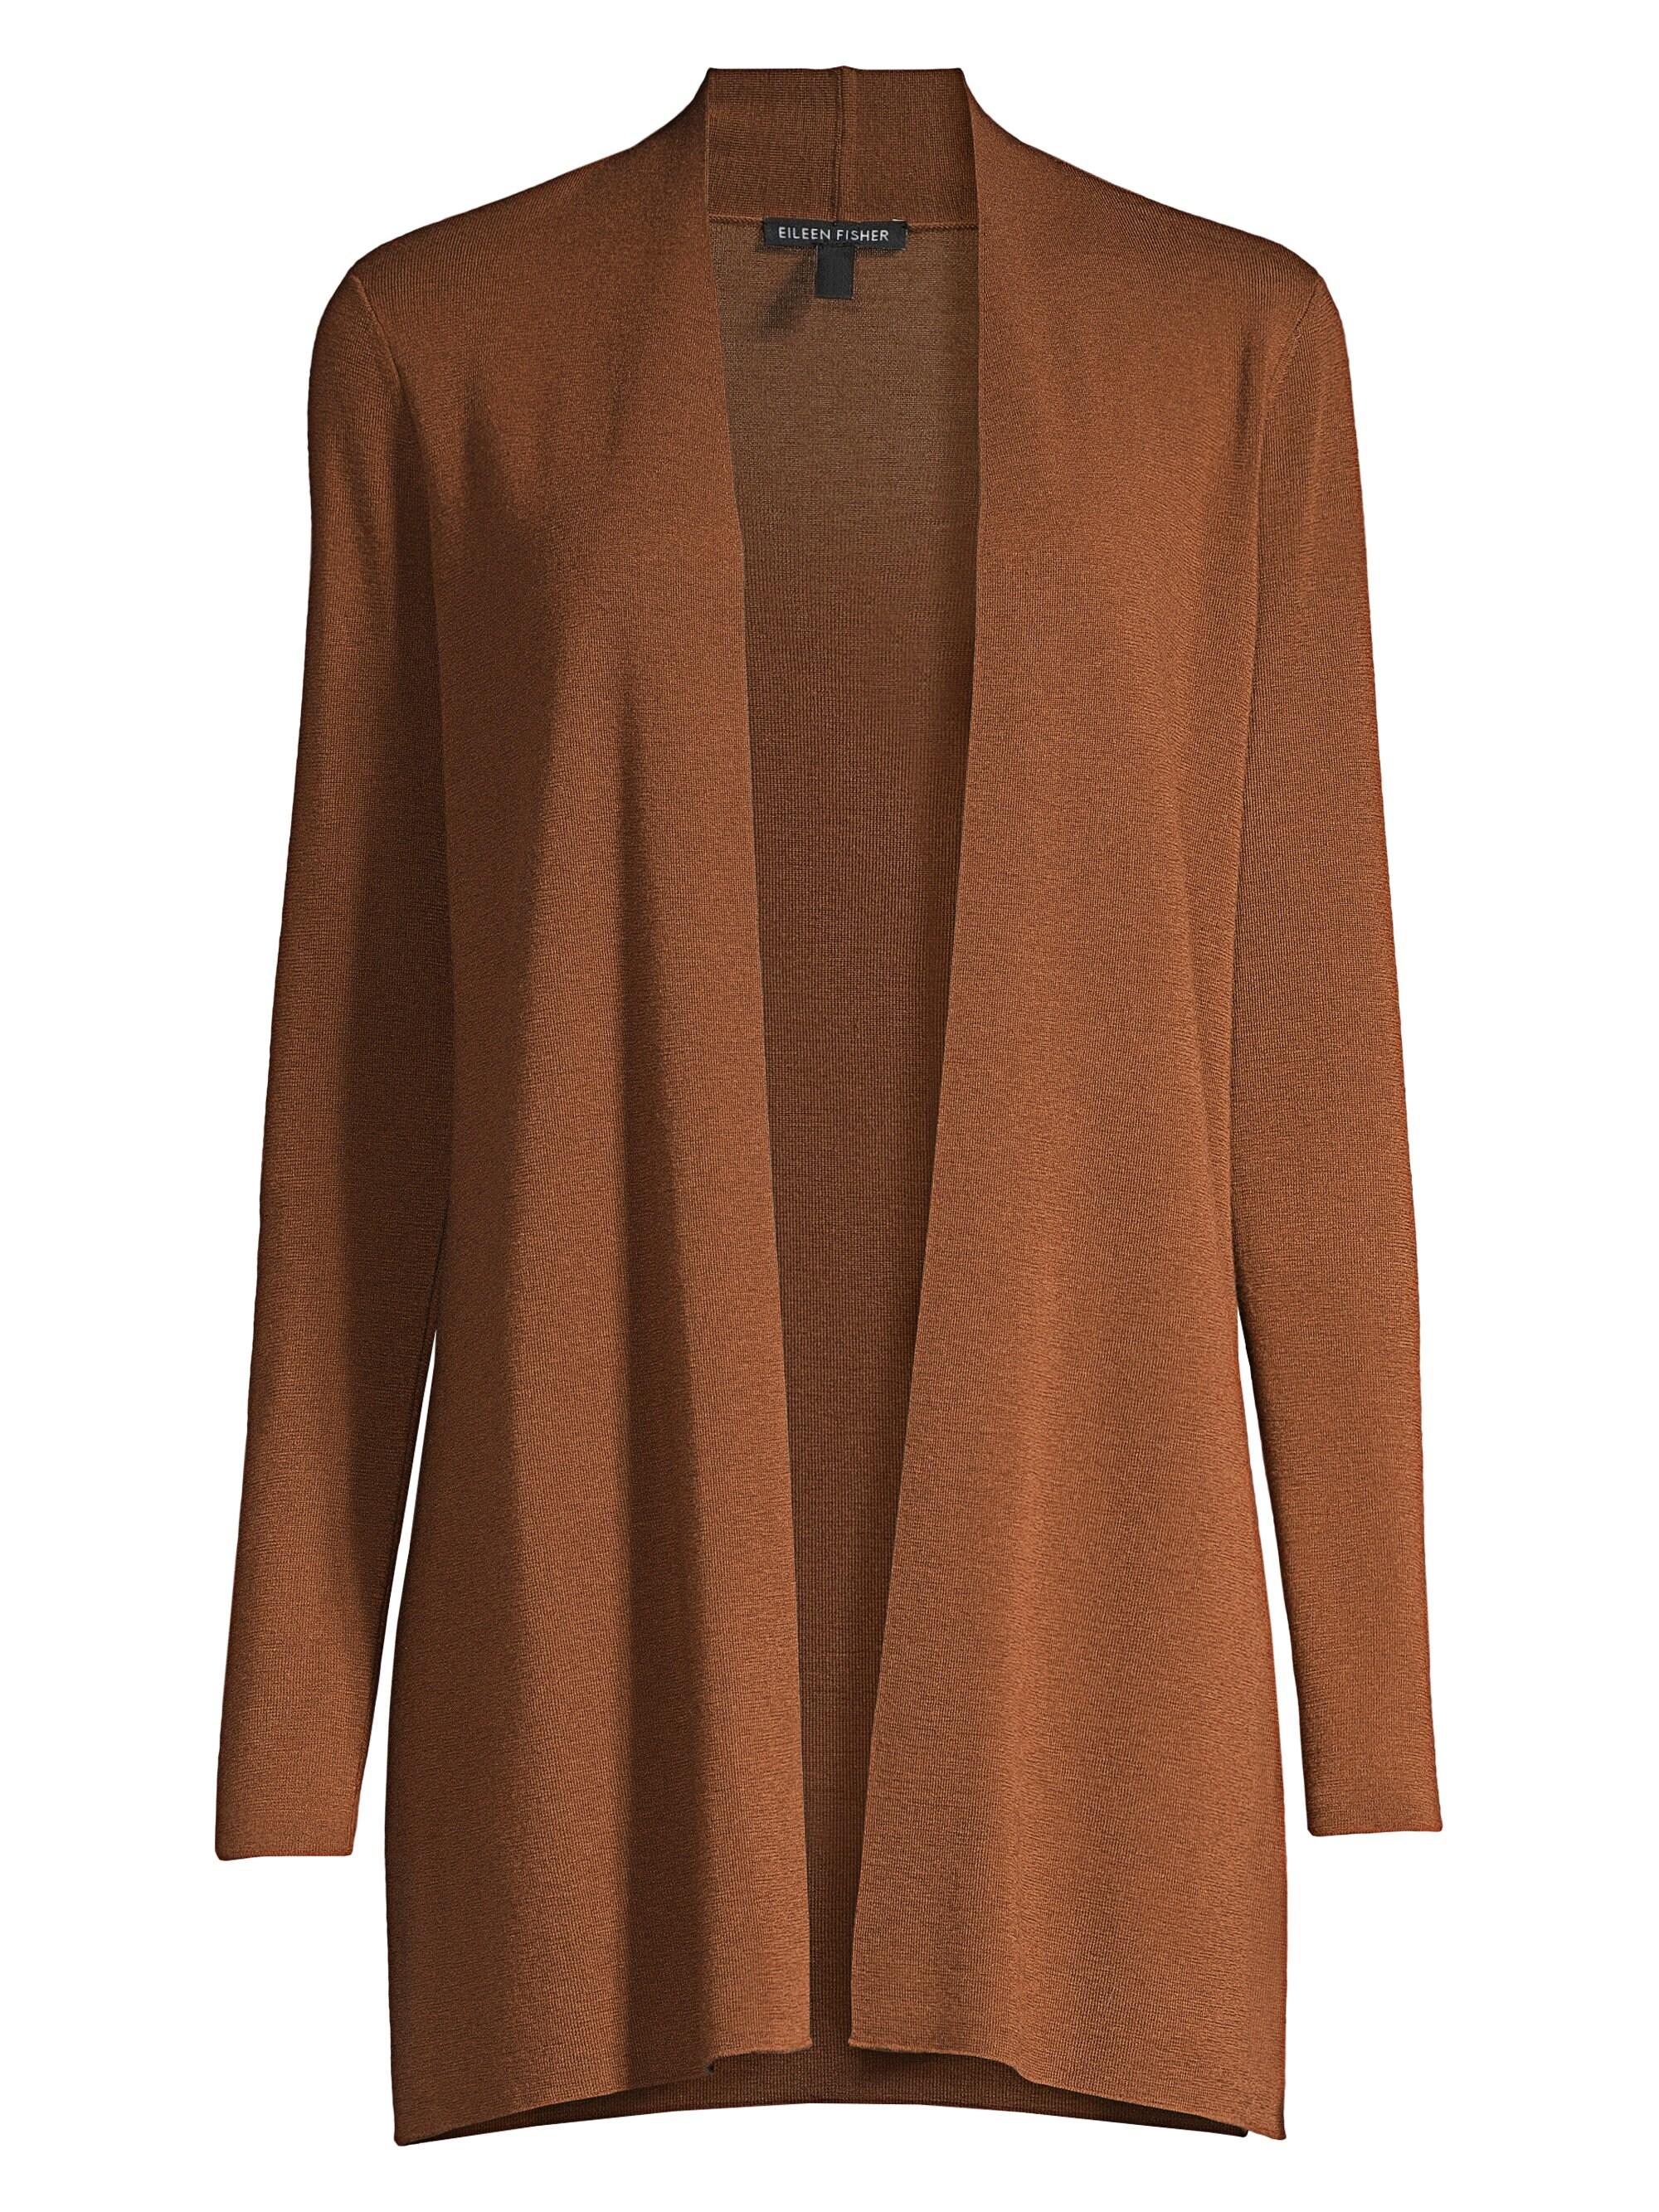 Eileen Fisher Simple Longline Merino Wool Cardigan Sweater in Brown - Lyst